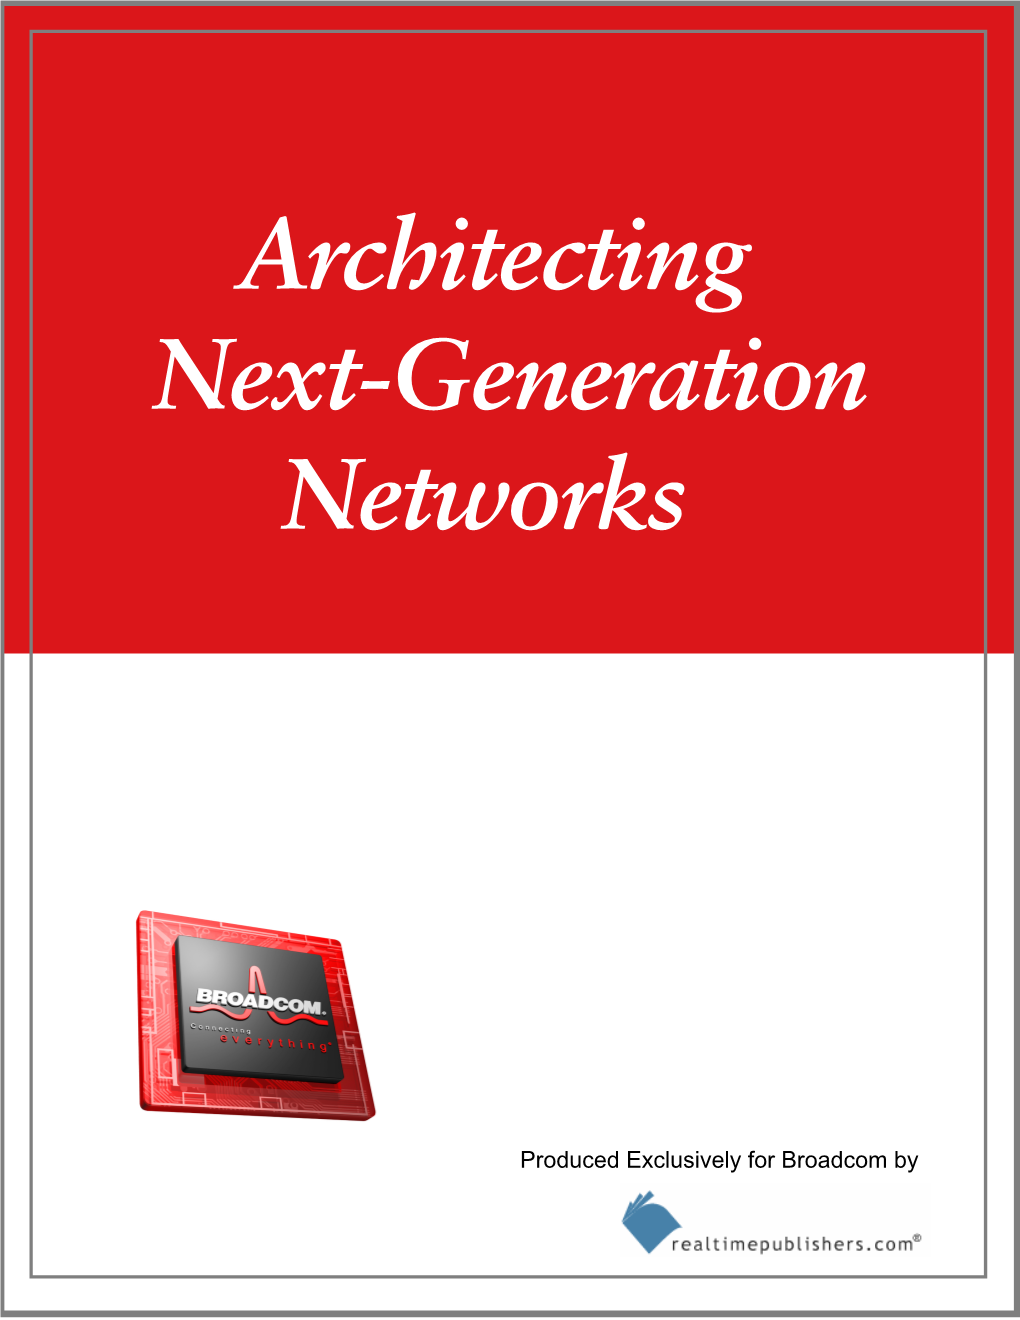 Architecting Next-Generation Networks